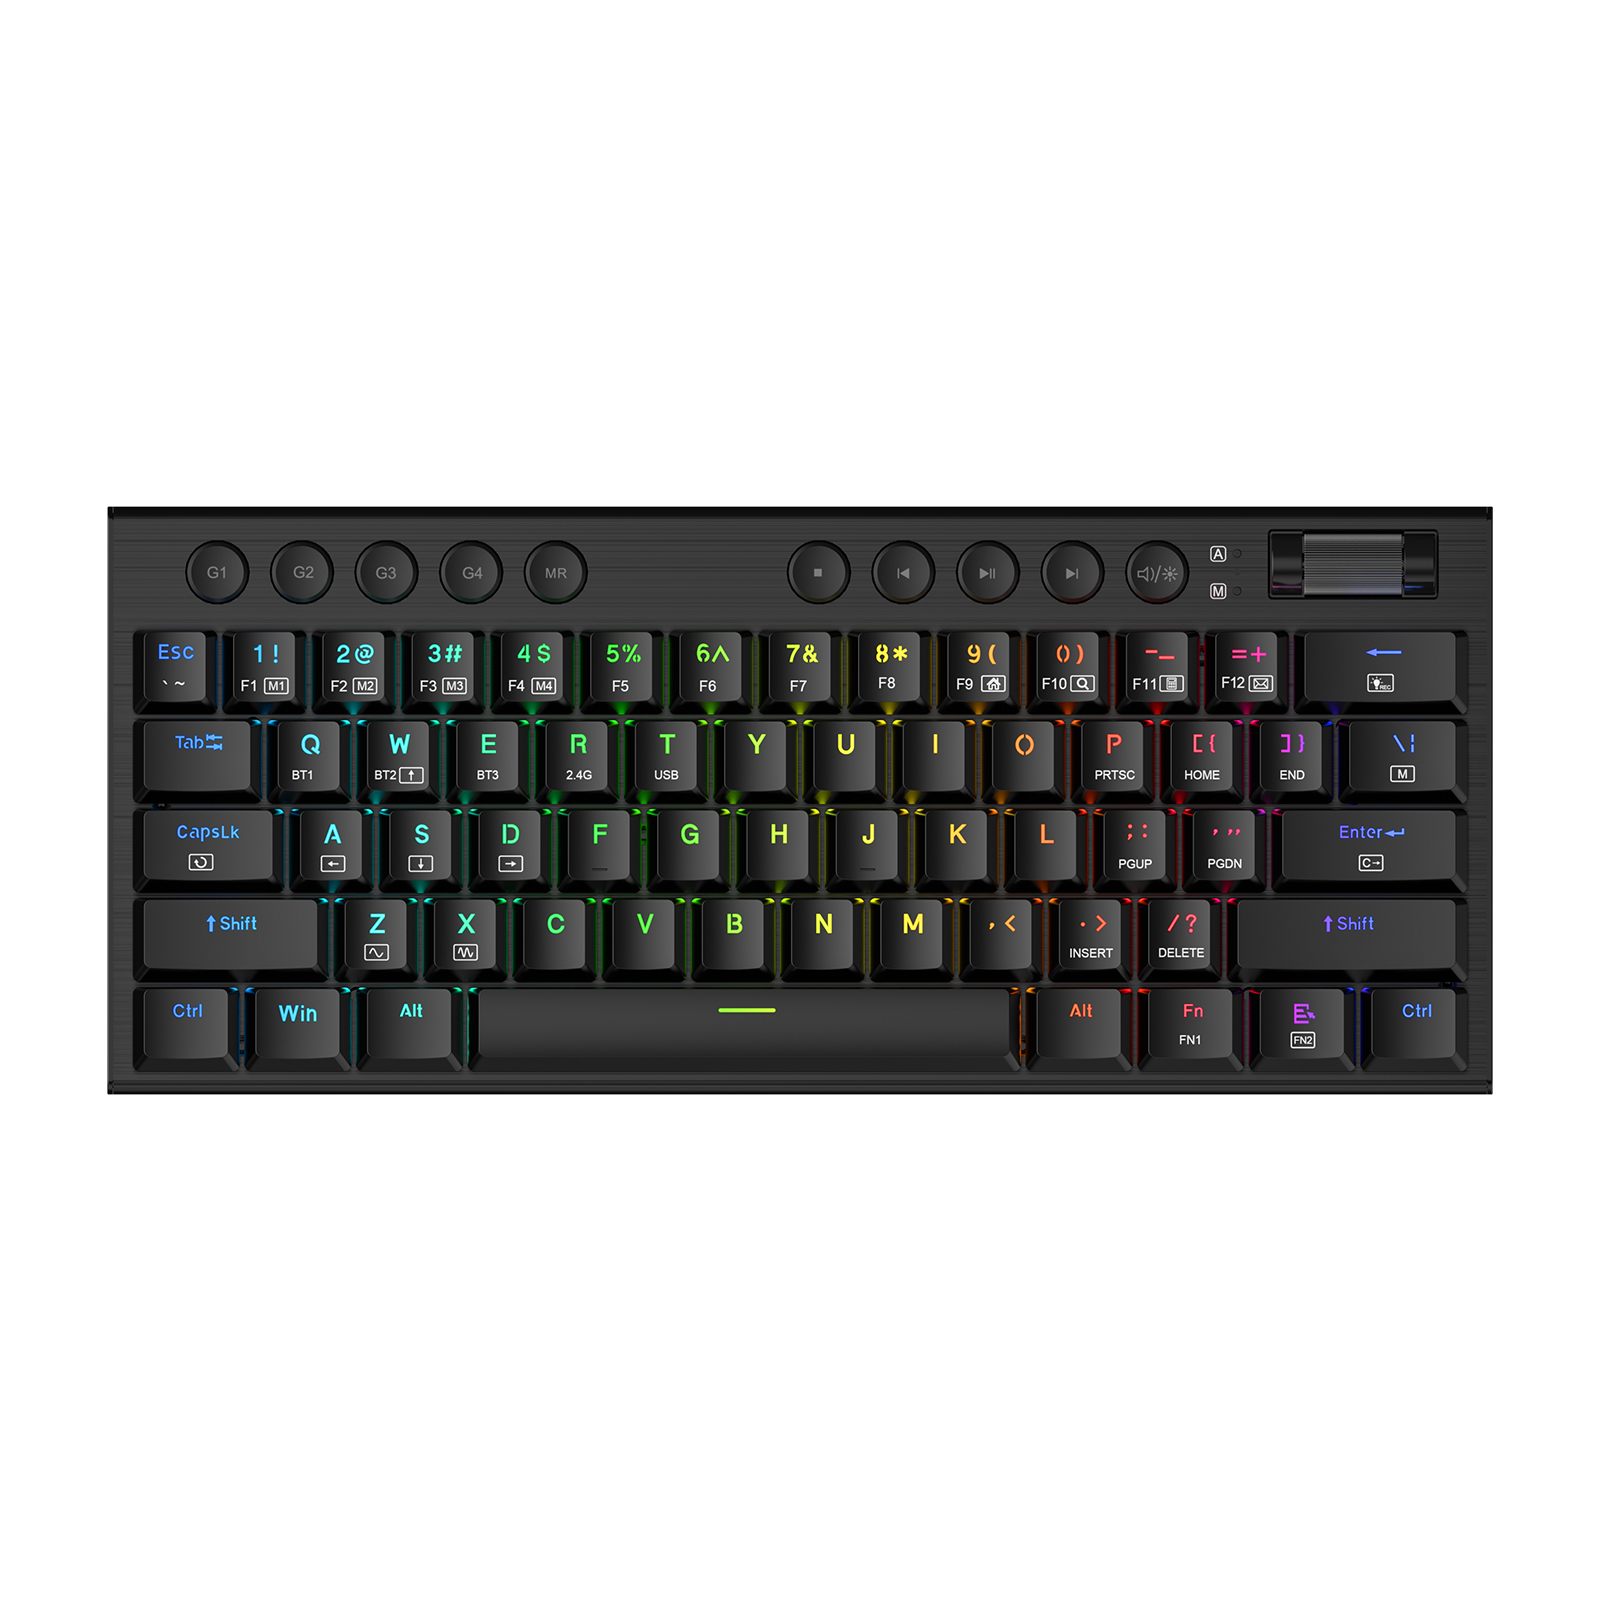 Redragon K632 PRO Noctis 60% Wireless RGB Mechanical Keyboard, Bluetooth/2.4Ghz/Wired Tri-Mode Ultra-Thin Low Profile Gaming Keyboard